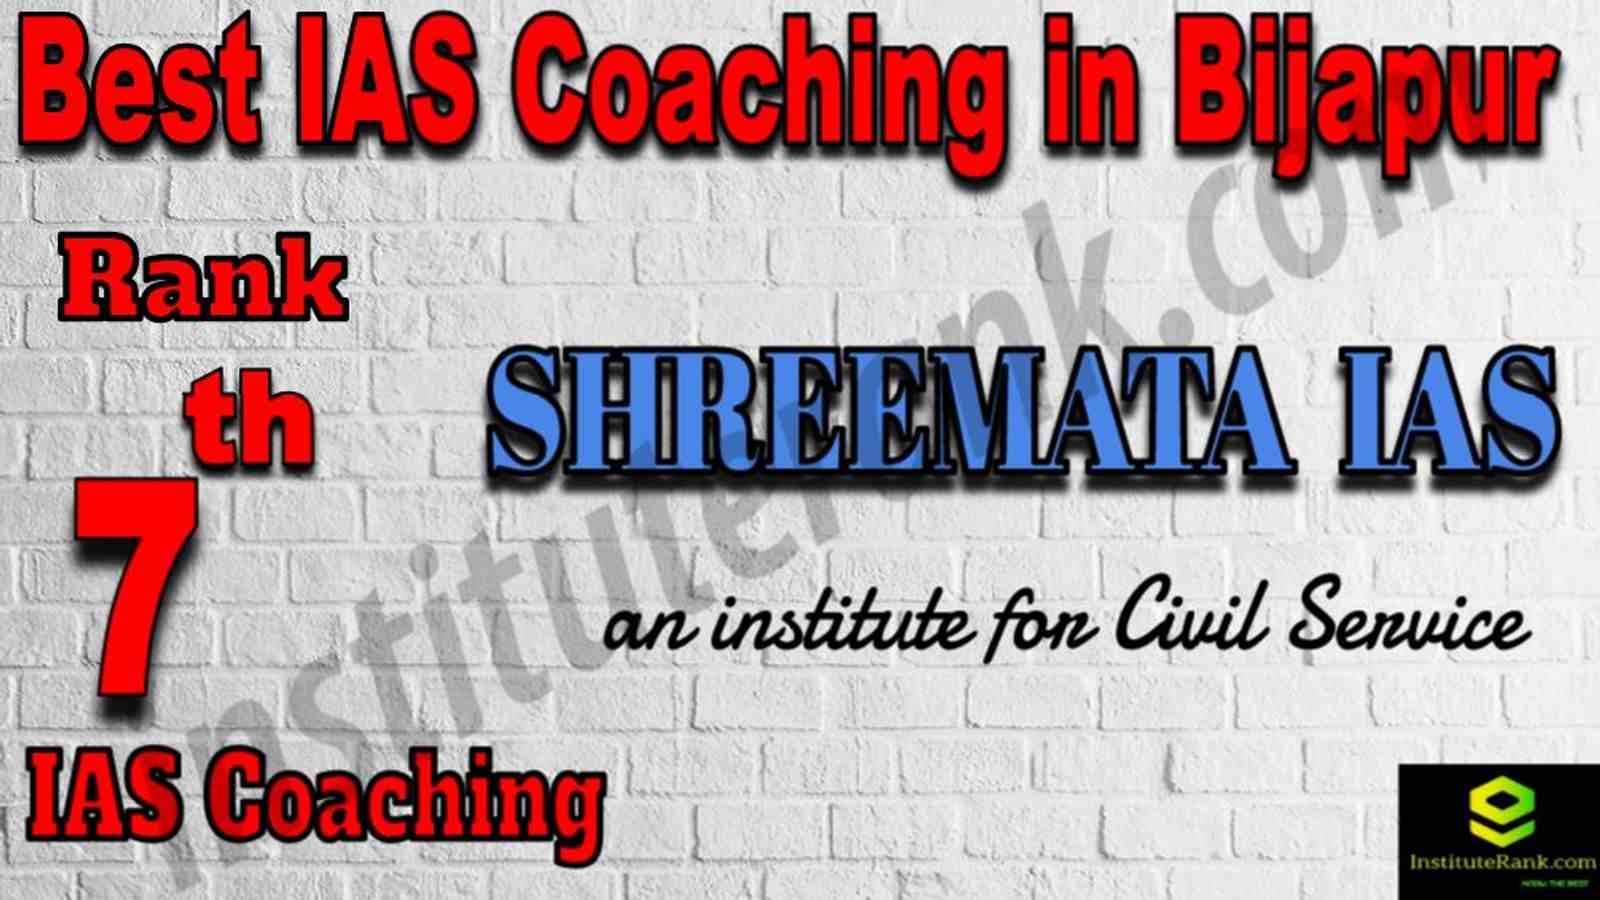 7th Best IAS Coaching in Bijapur